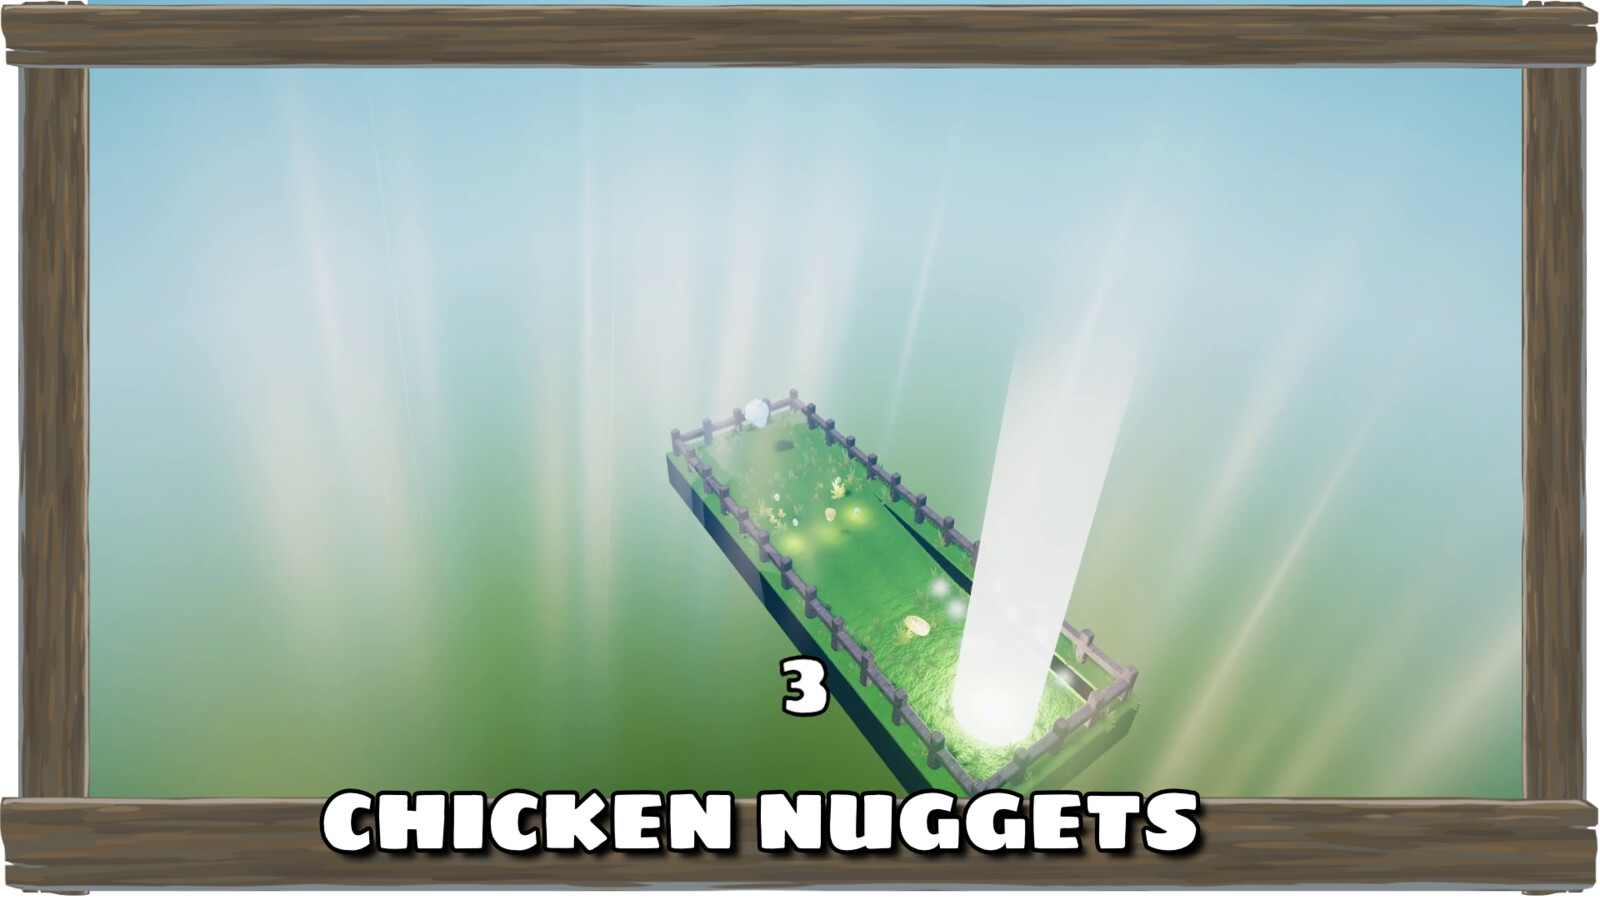 Tutorial level in Chicken Nuggets